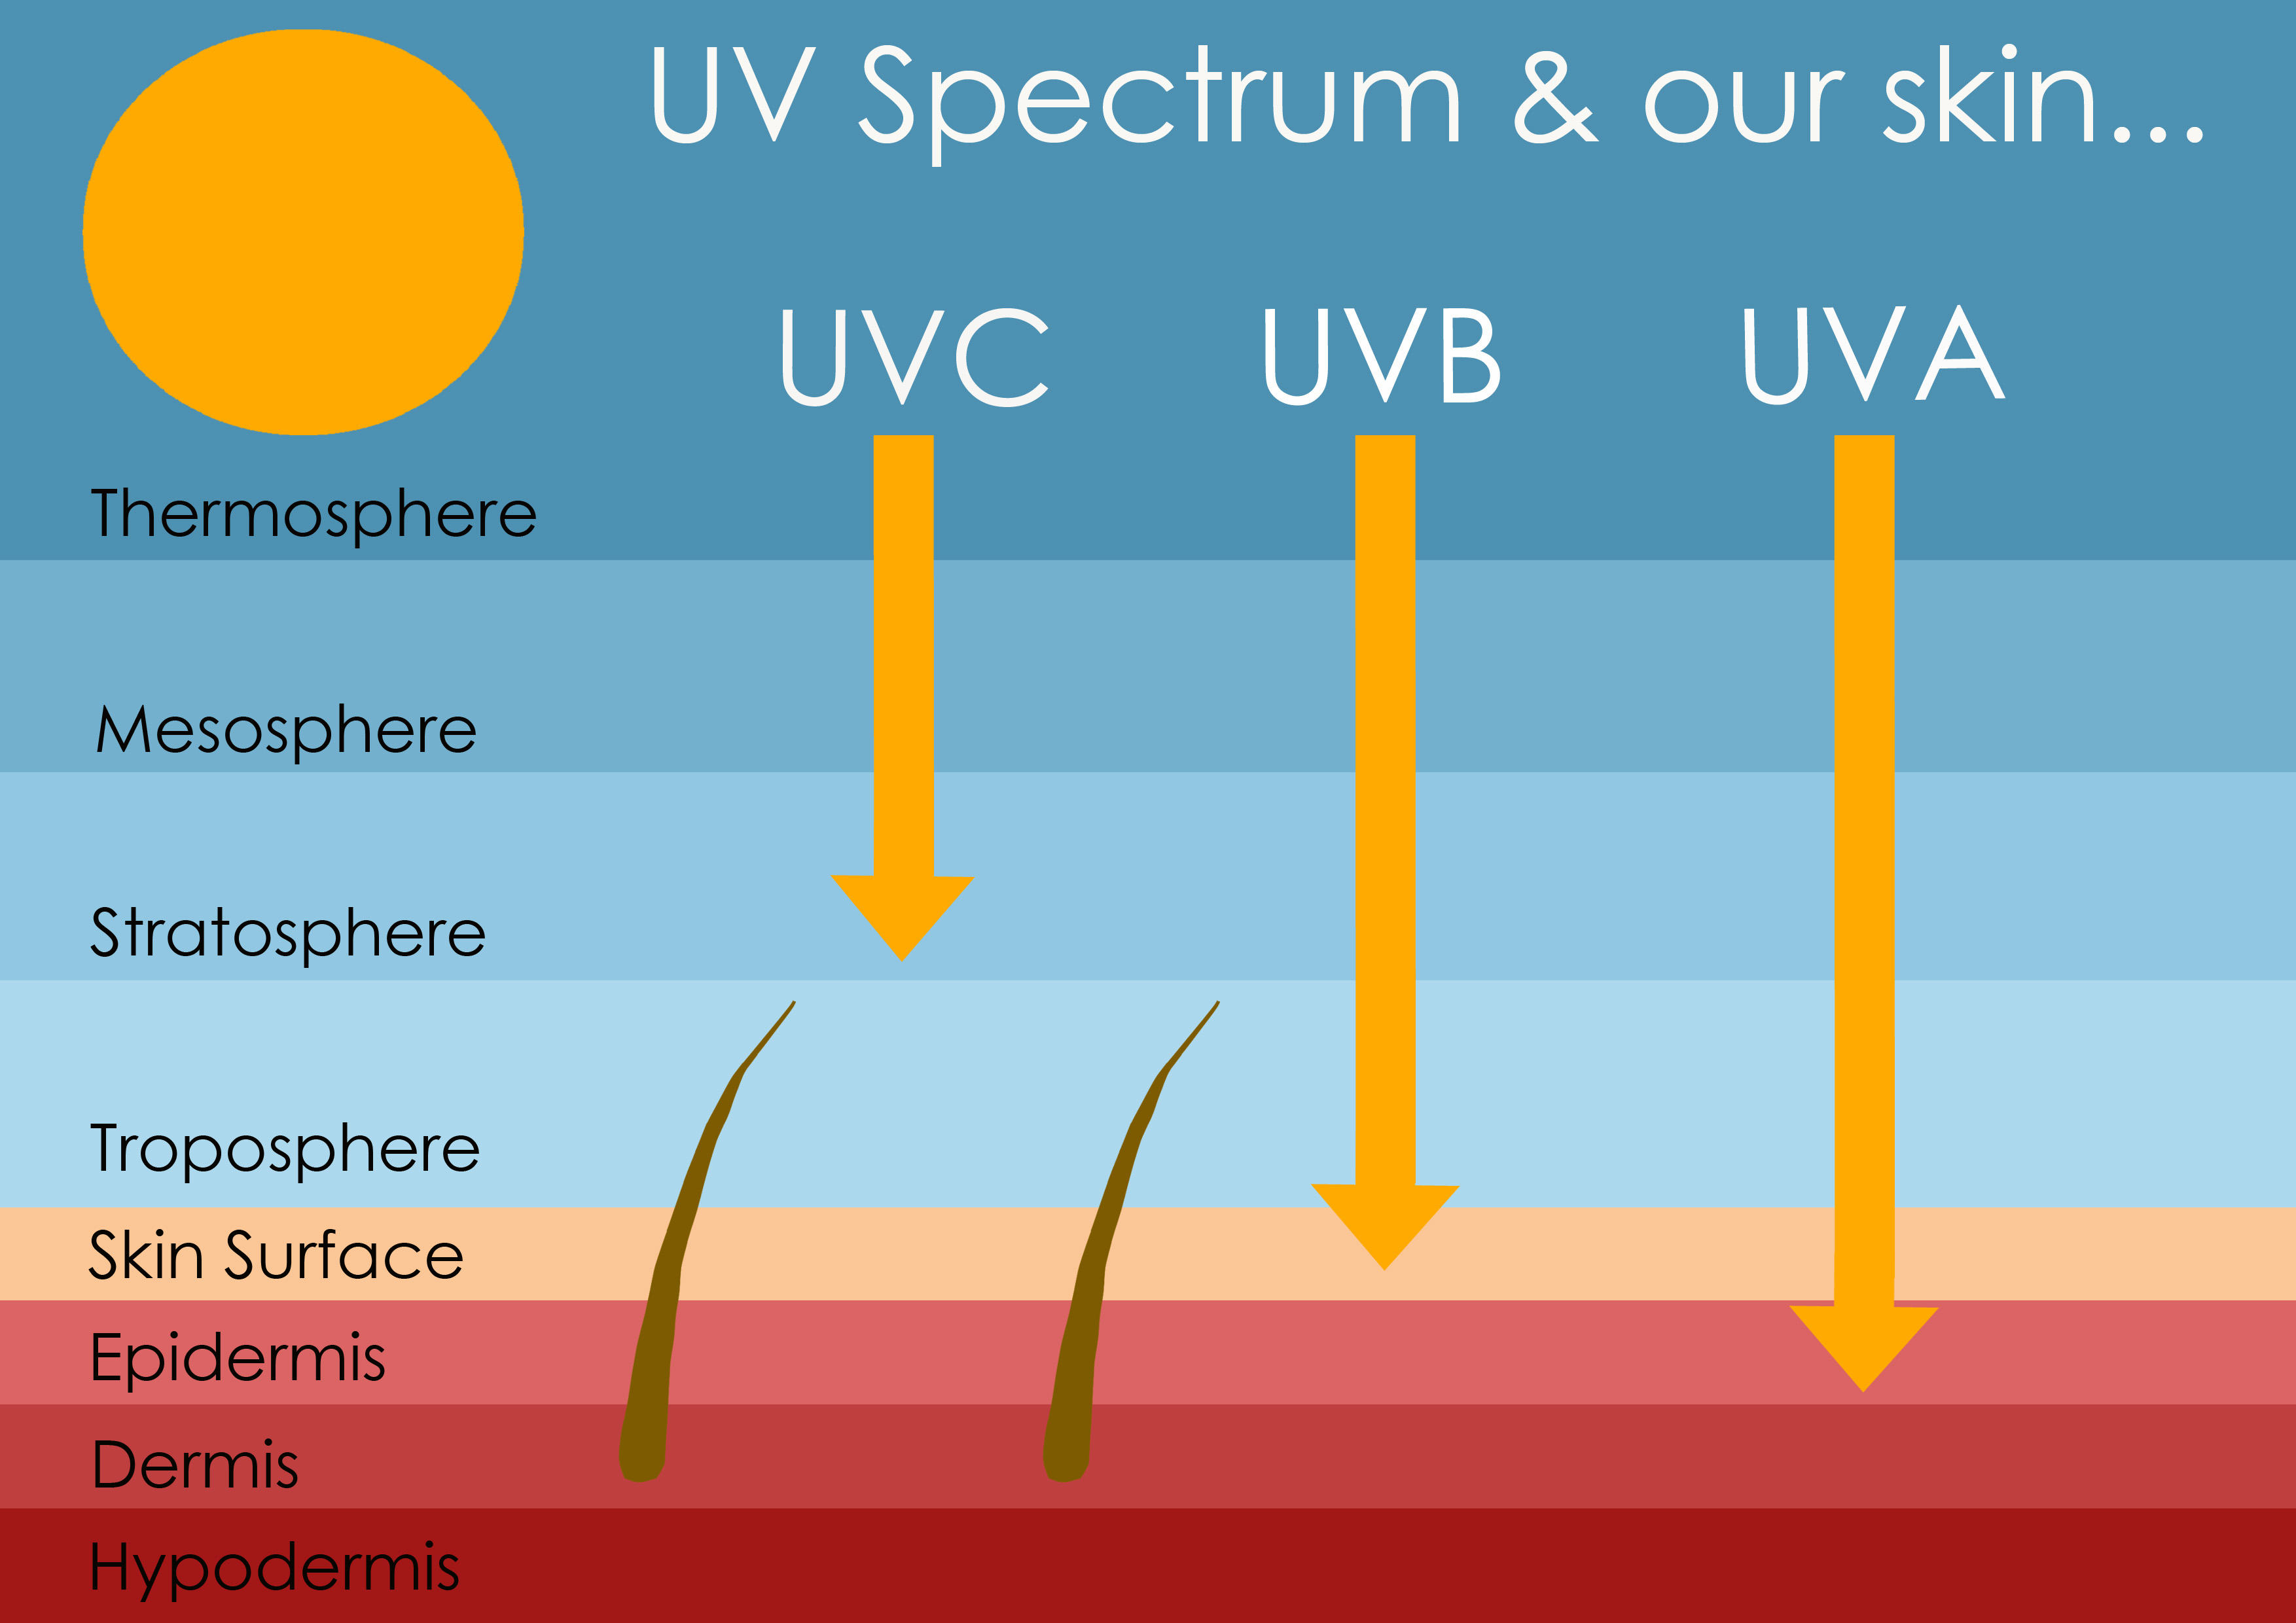 Natural sunscreen reflects UV rays